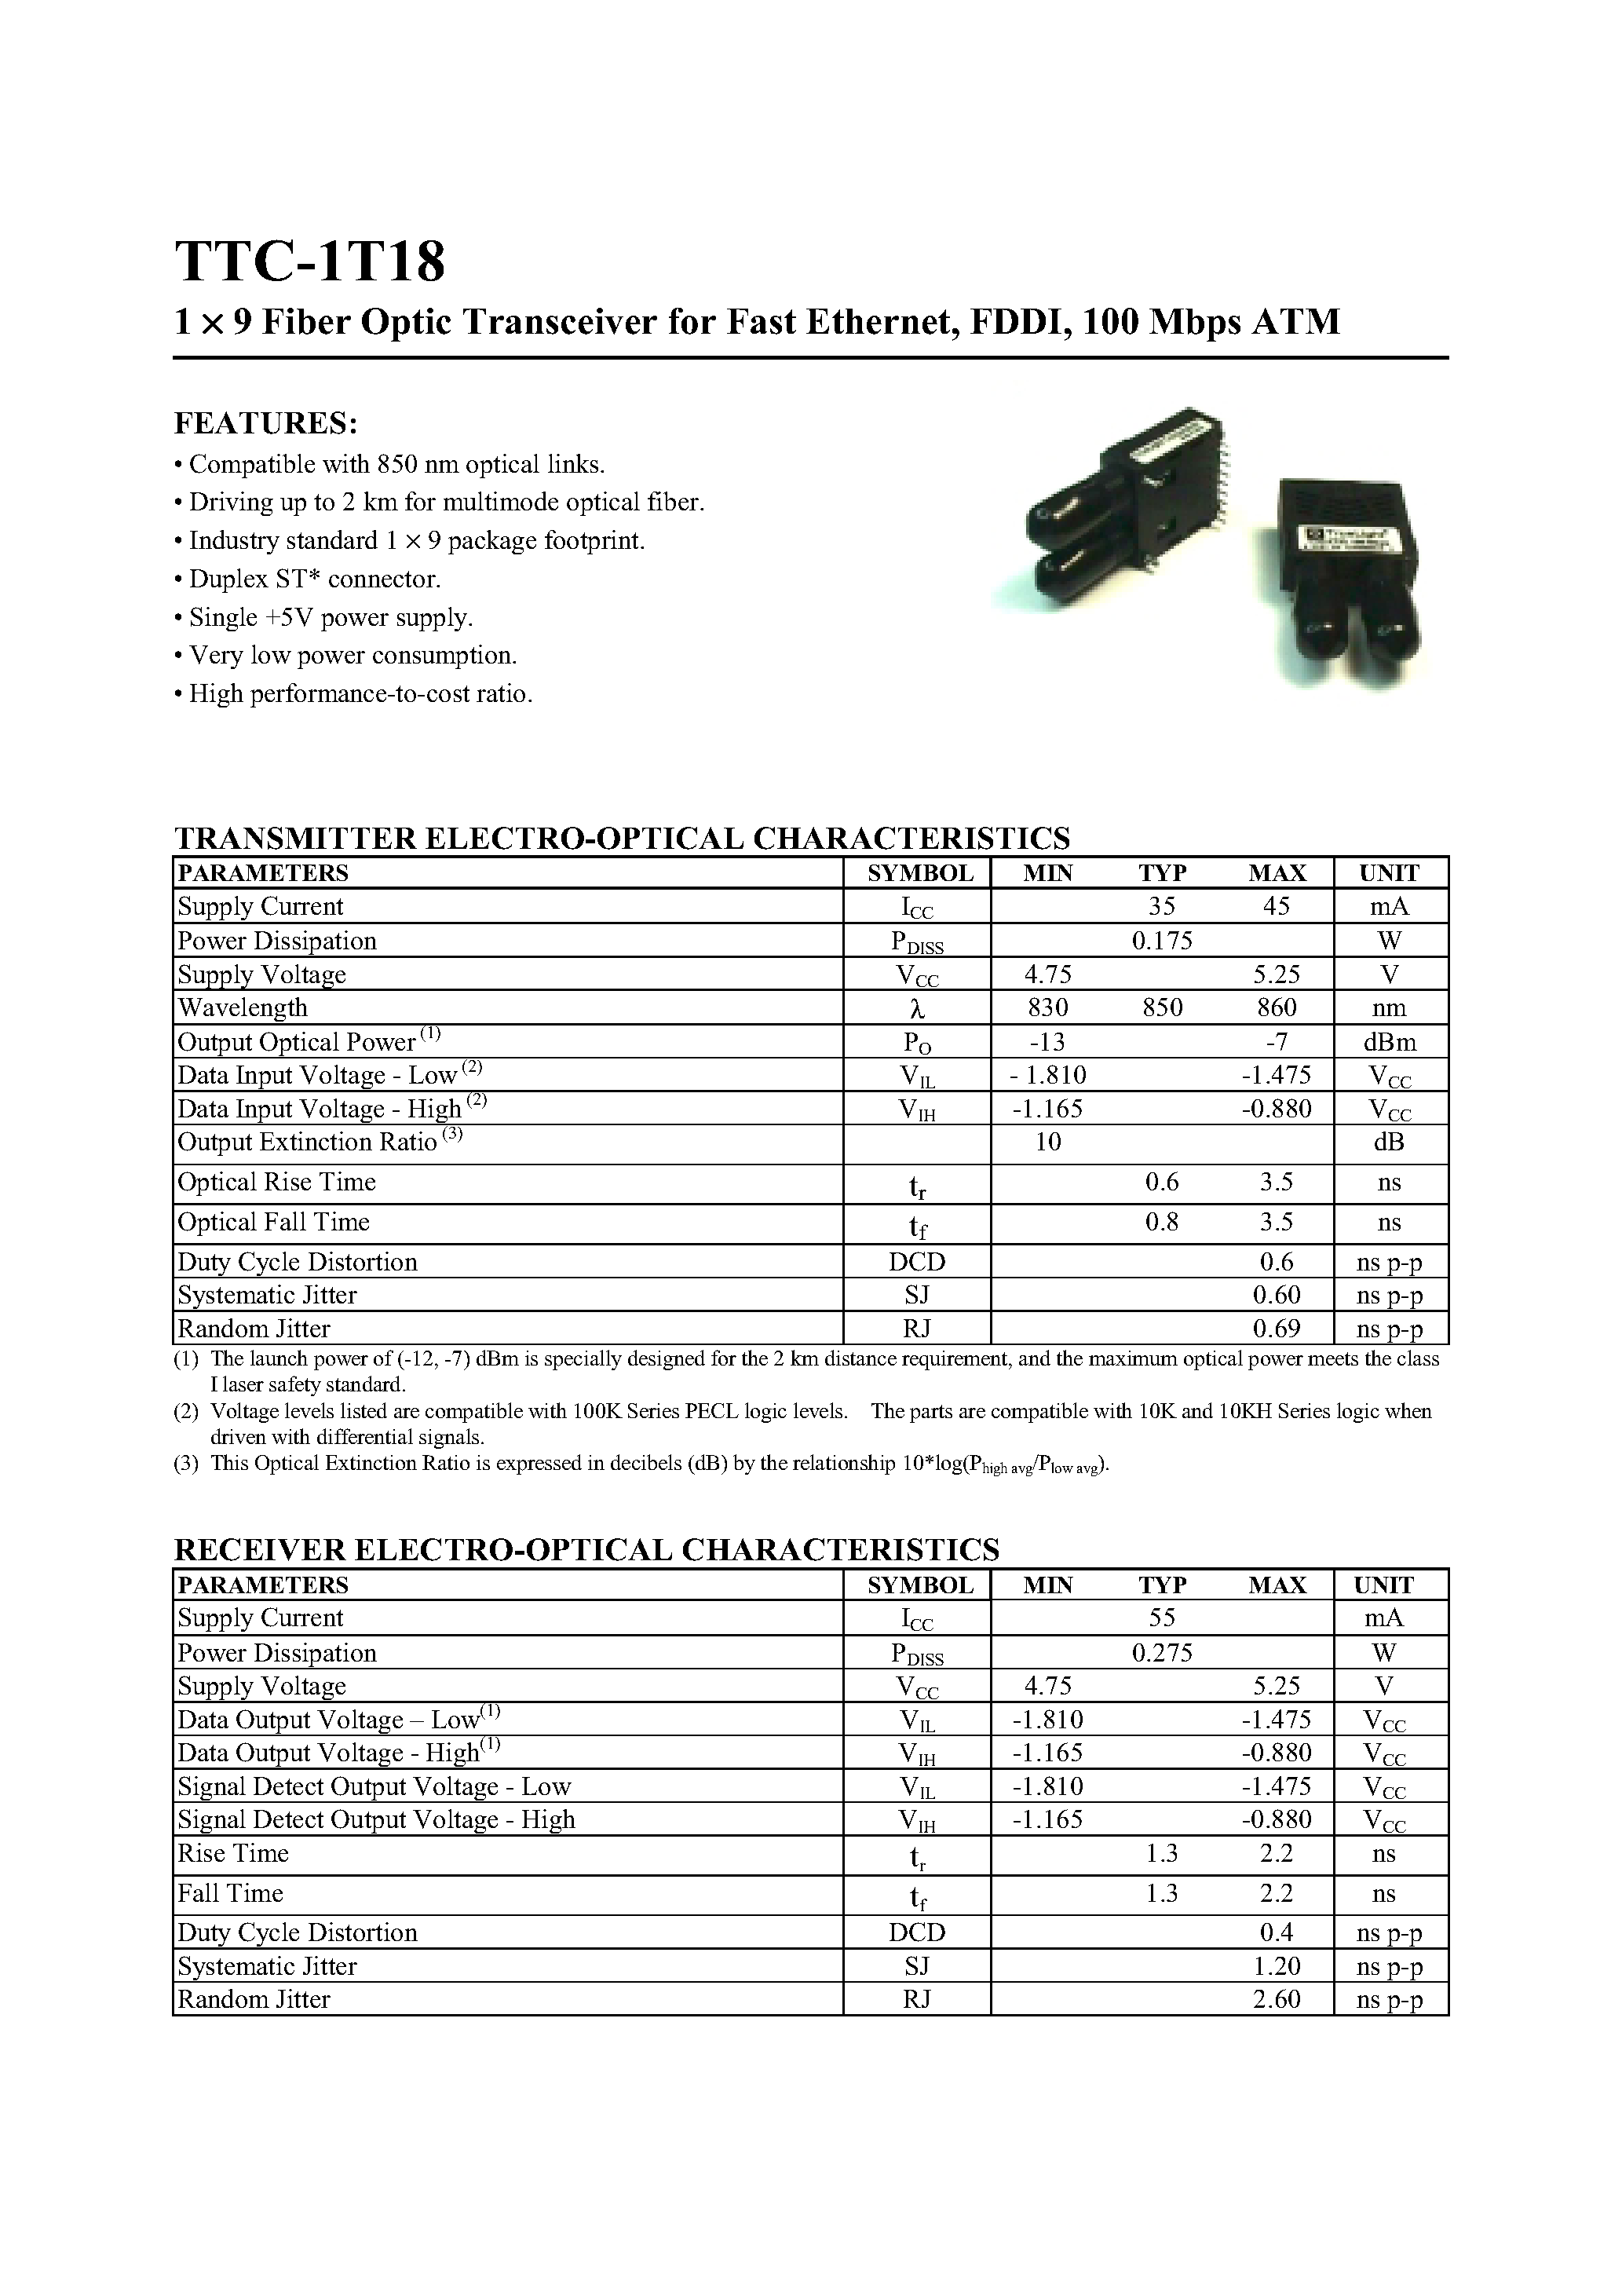 Datasheet TTC-1T18 - 1 X 9 FIBER OPTIC TRANSCEIVER FOR FAST ETHERNET page 1